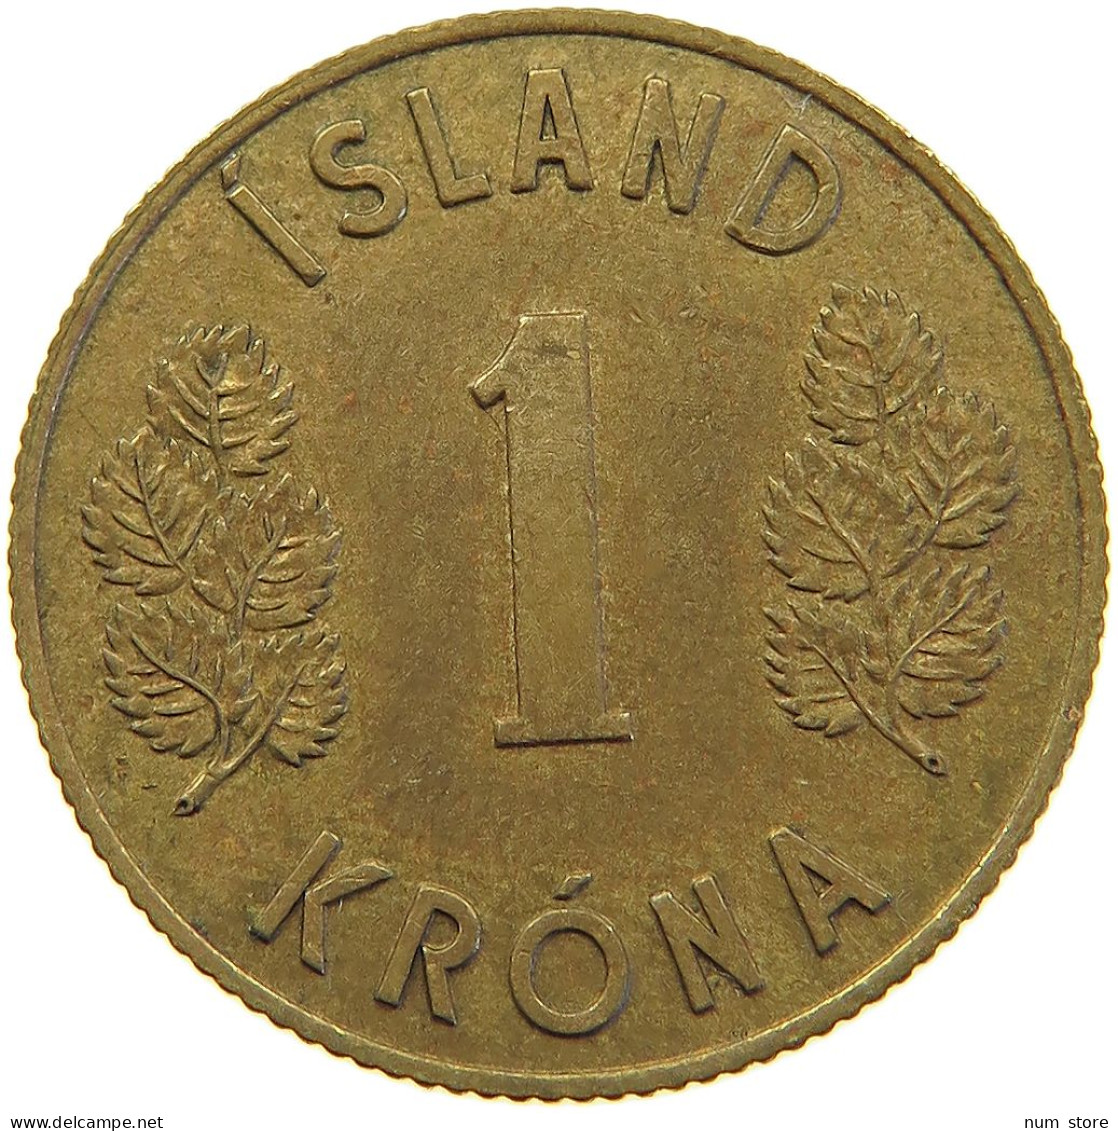 ICELAND KRONA 1957  #MA 067909 - Iceland